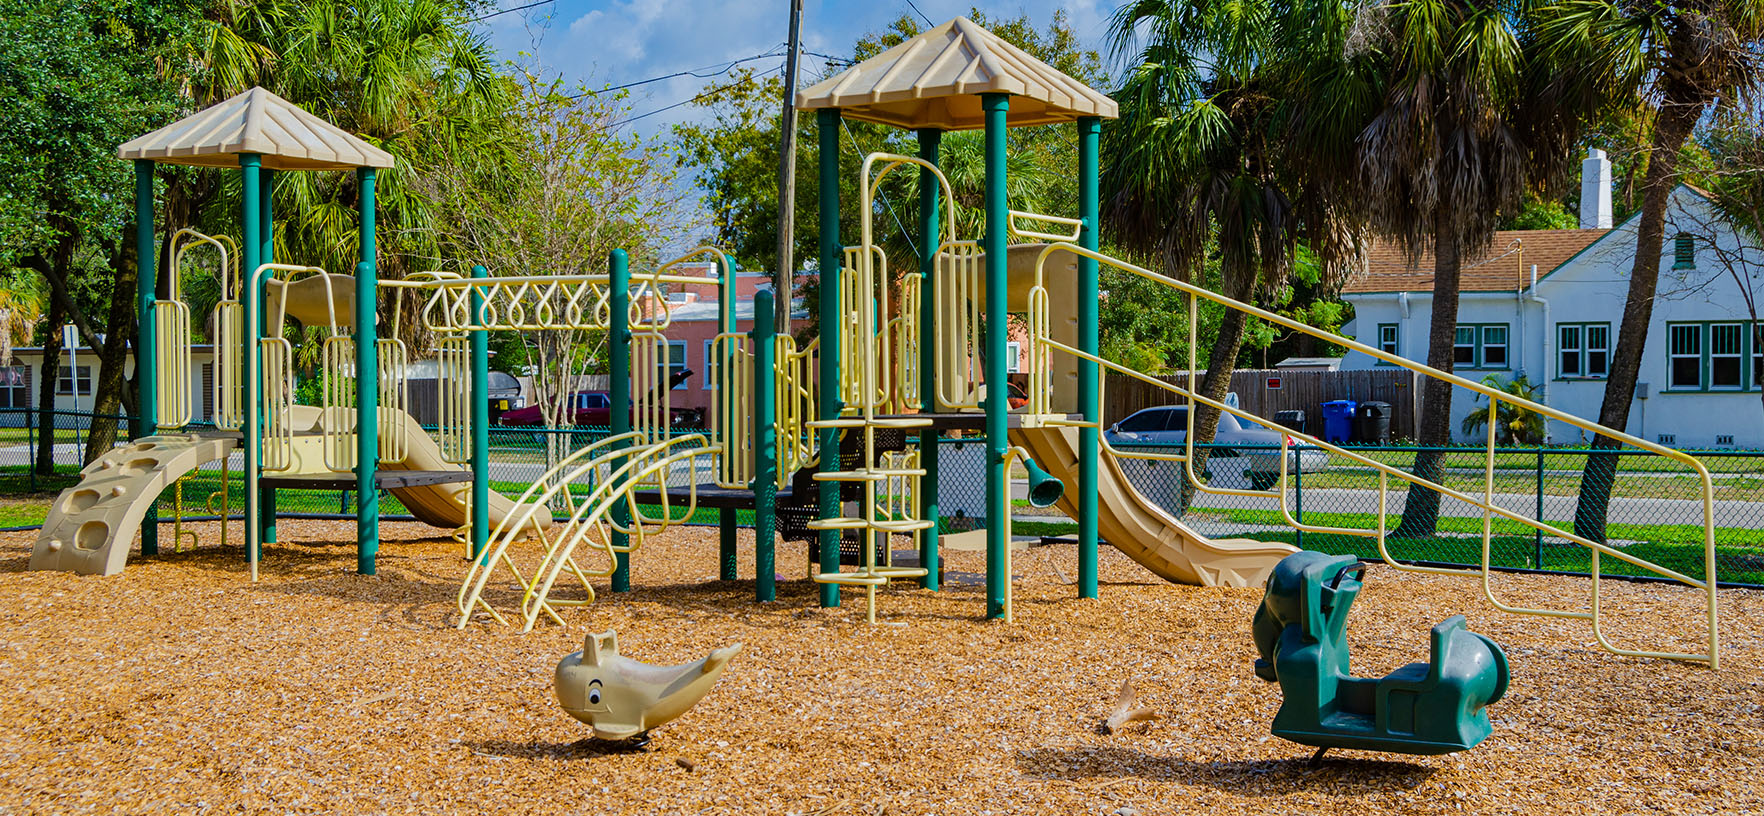 Lakewood Terrace Park Playground